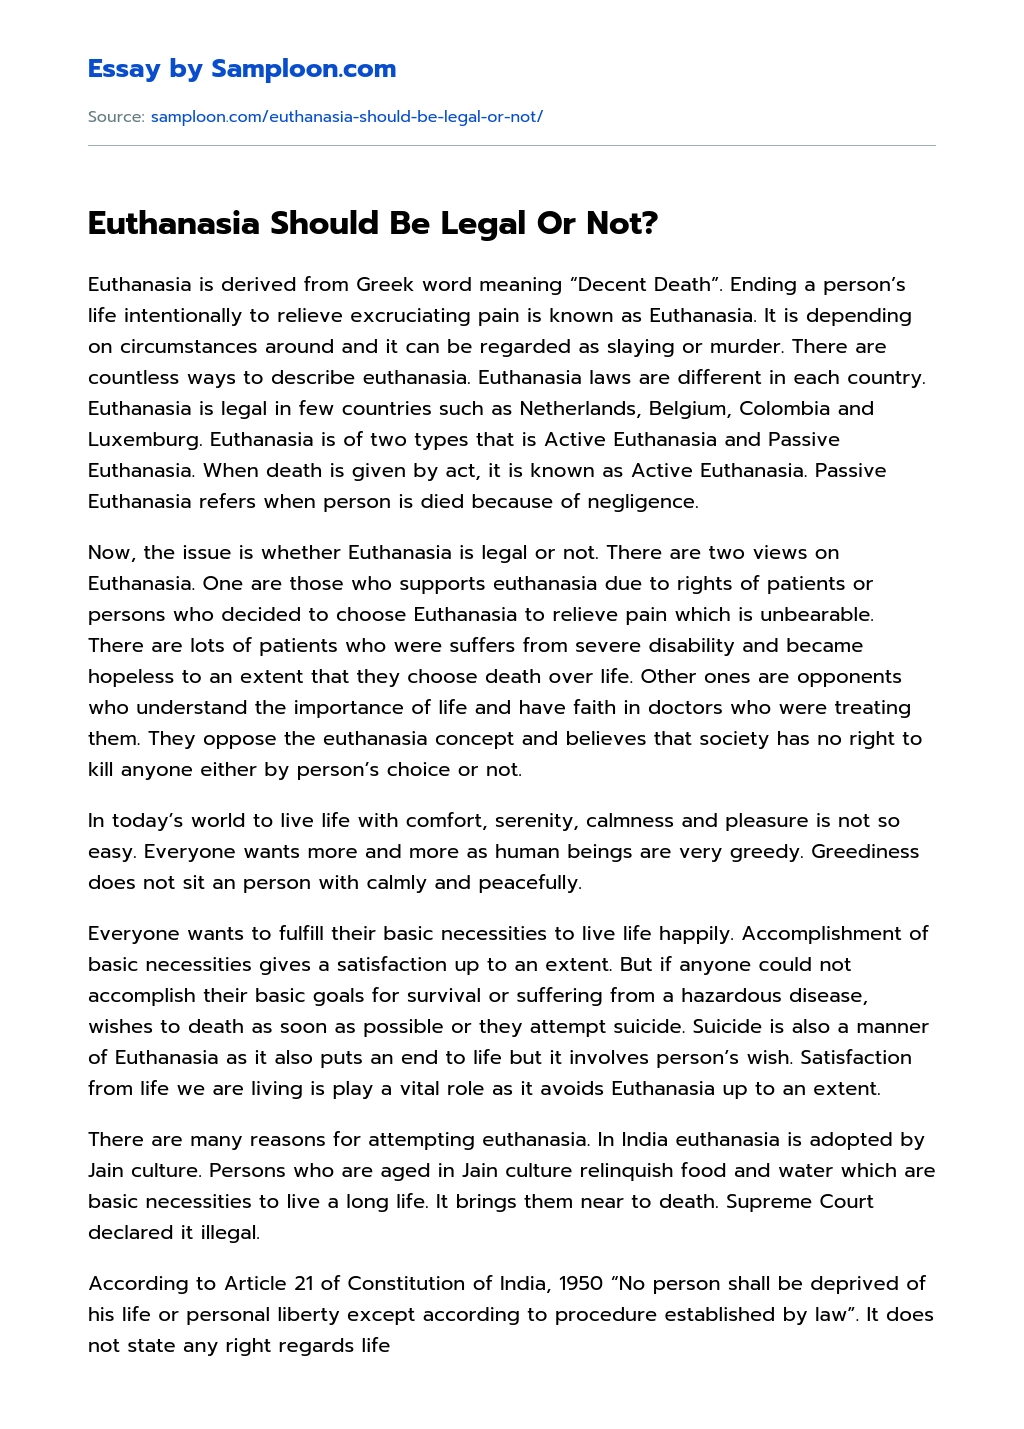 euthanasia should be made legal essay